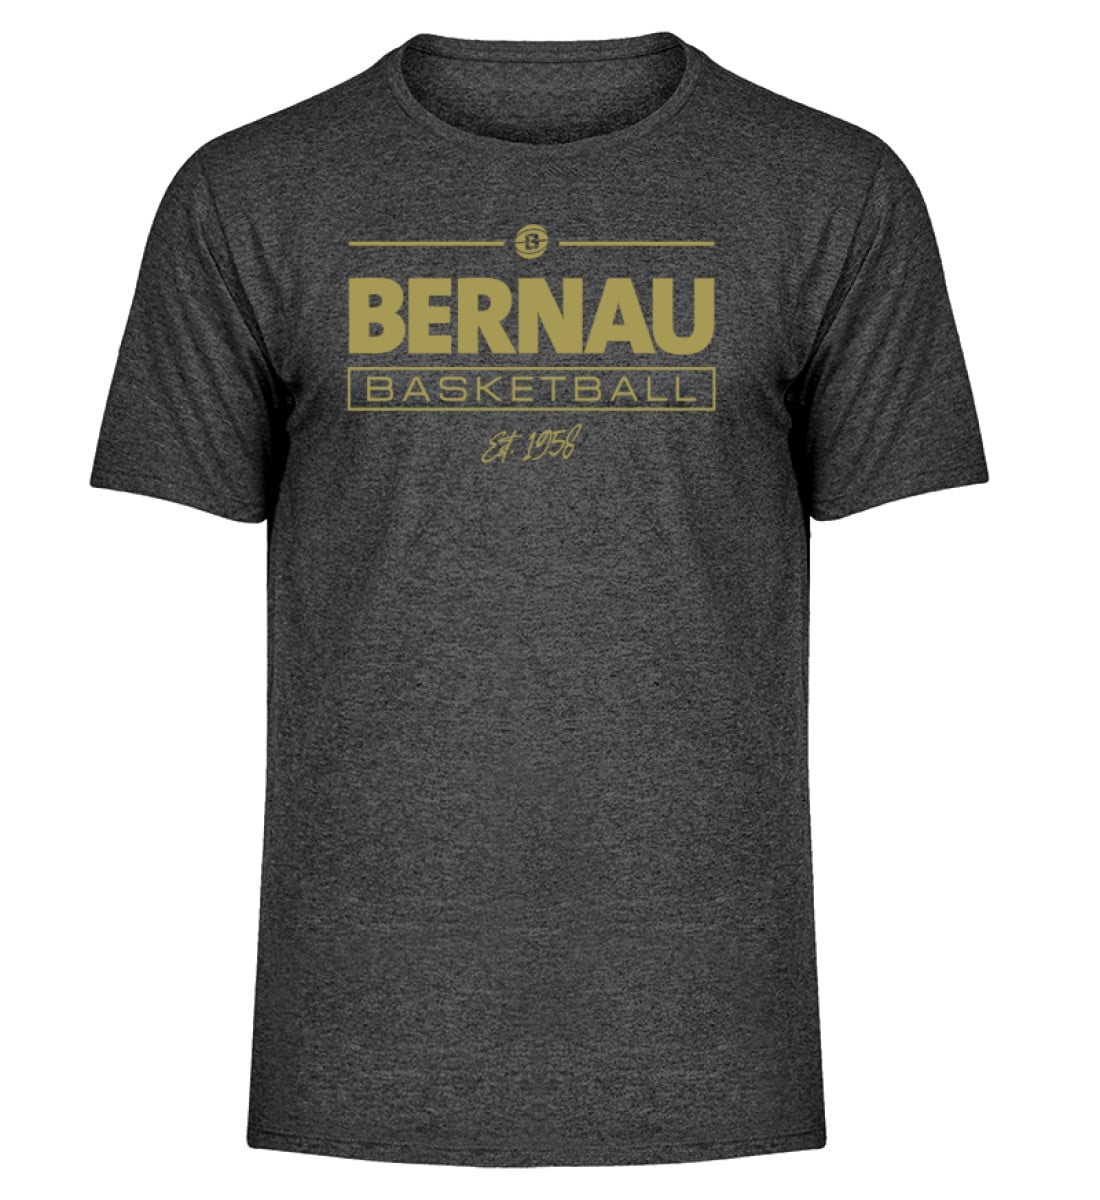 Bernau Finest Basketball - Herren Melange Shirt-6808